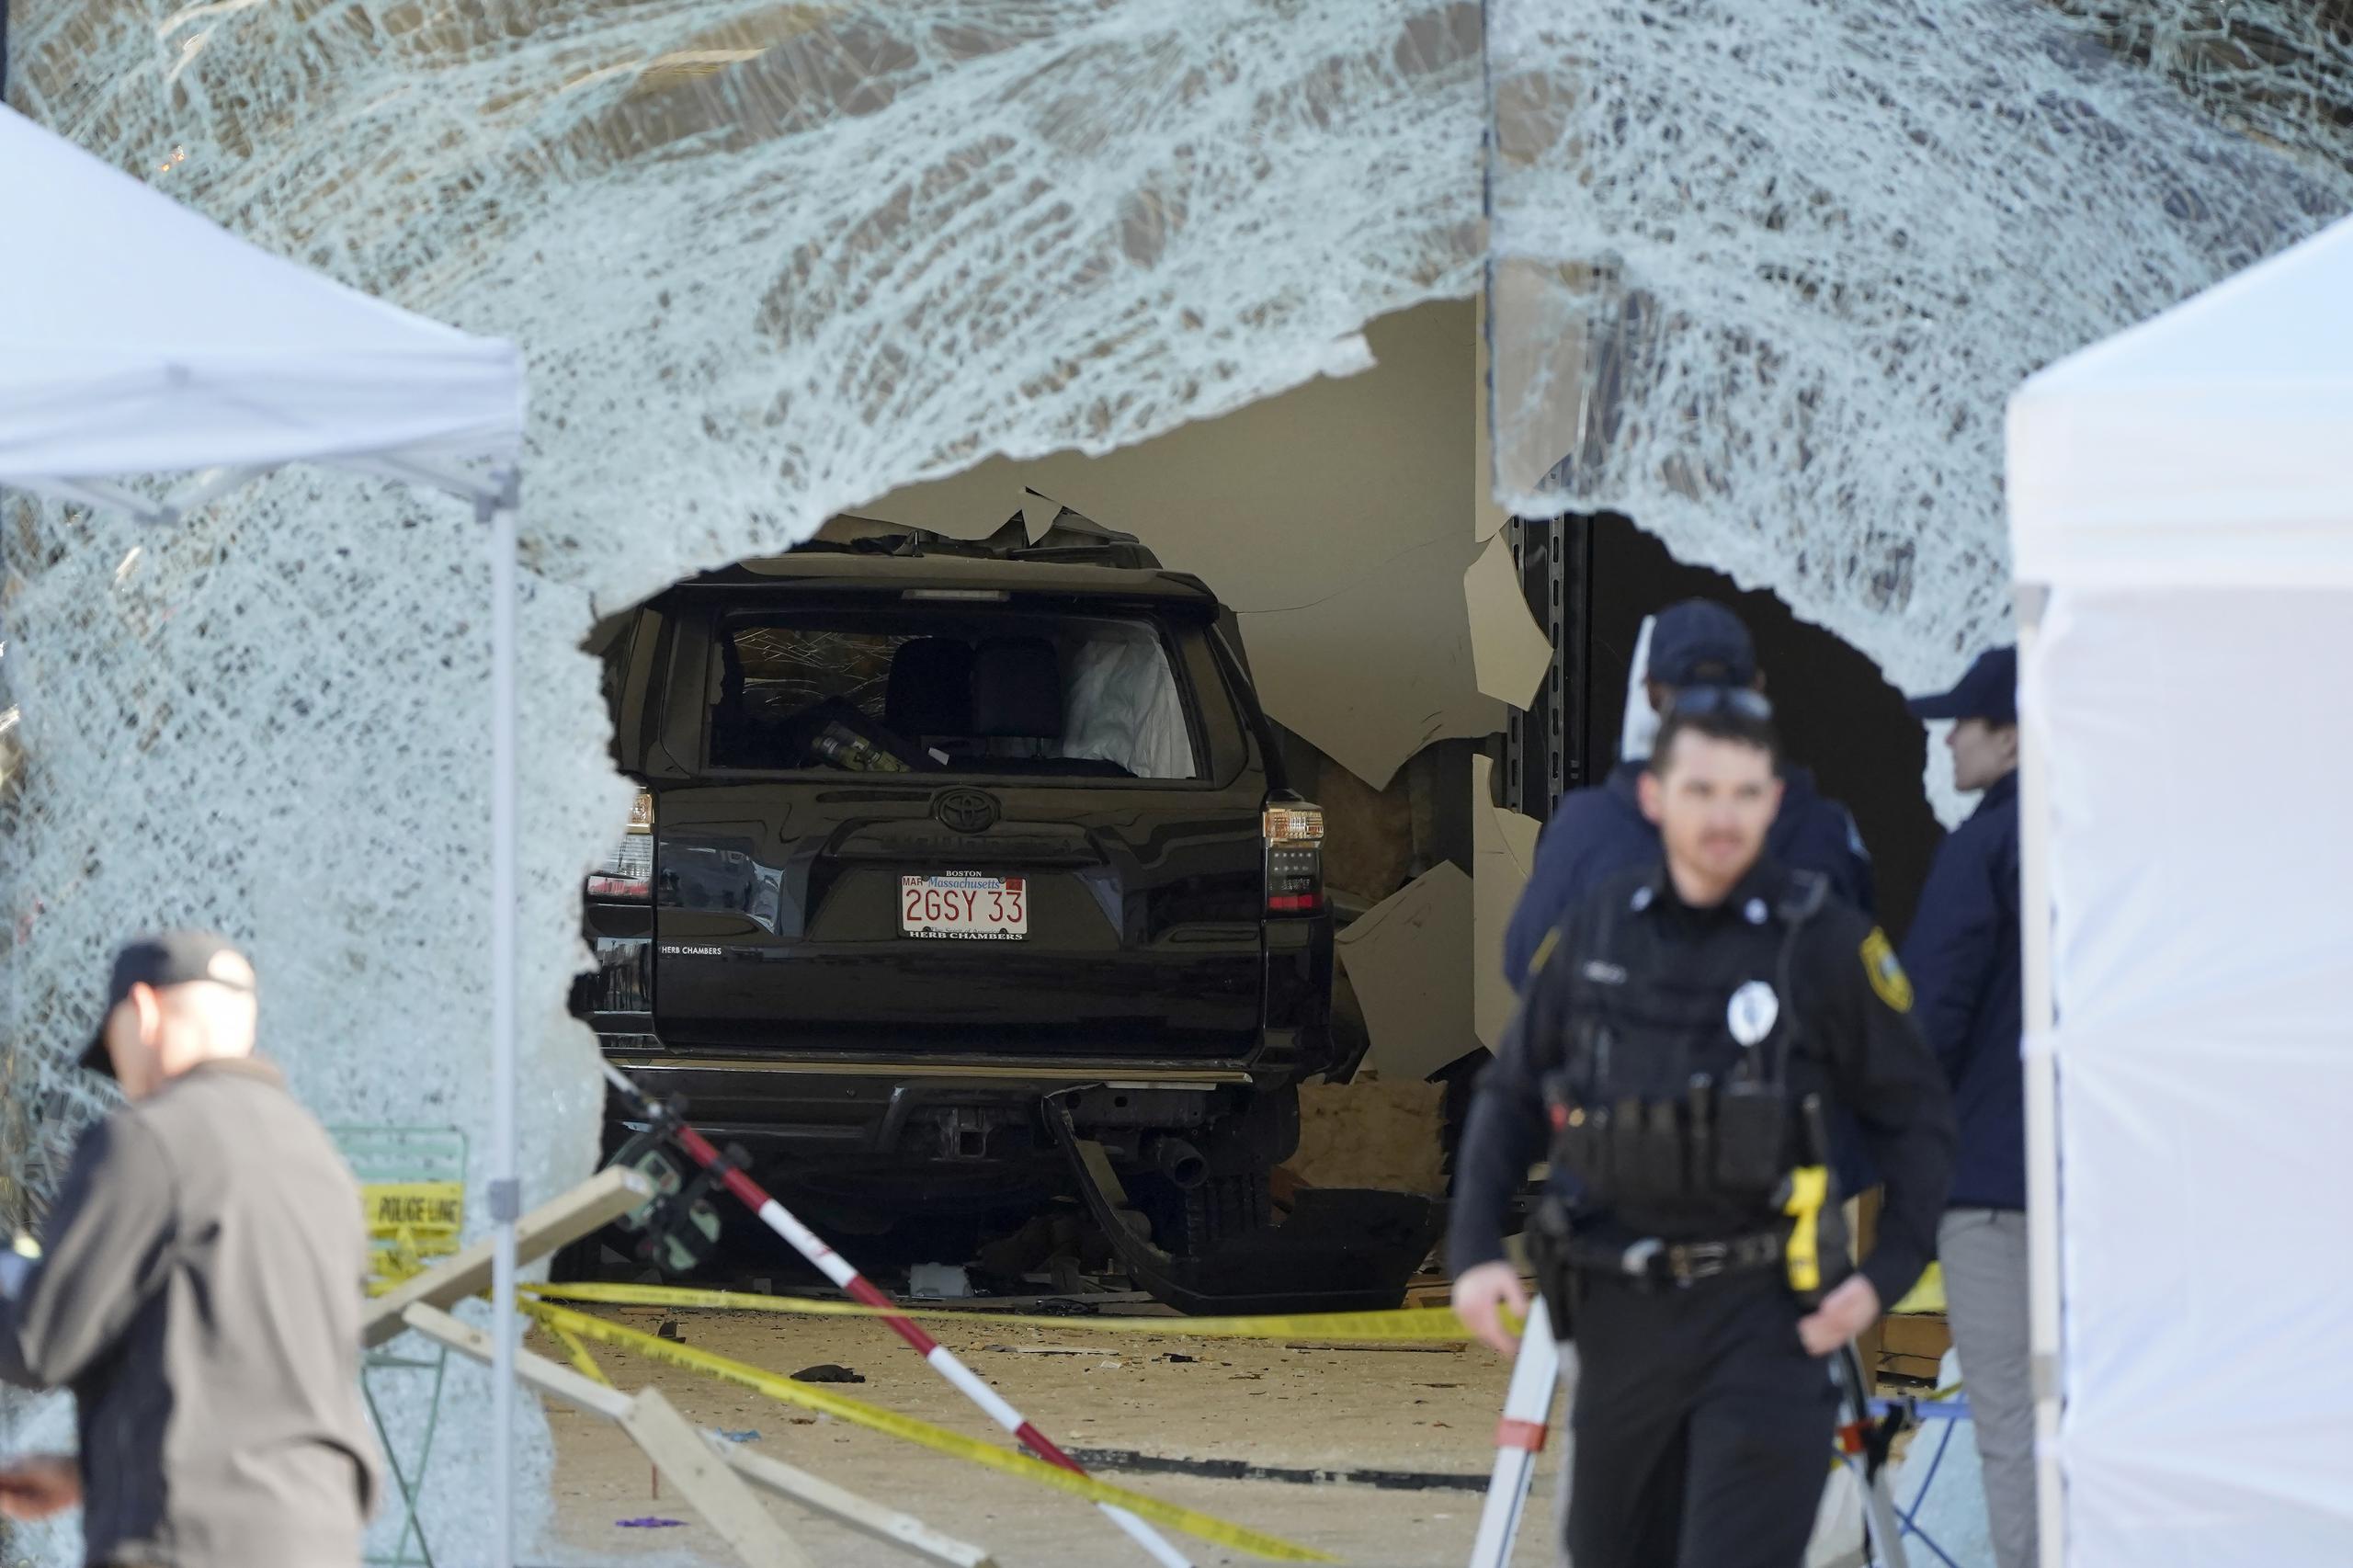 Una camioneta SUV dentro de una tienda de Apple luego de que se estrelló contra el inmueble, en Hingham, Massachusetts. (AP Foto/Steven Senne)